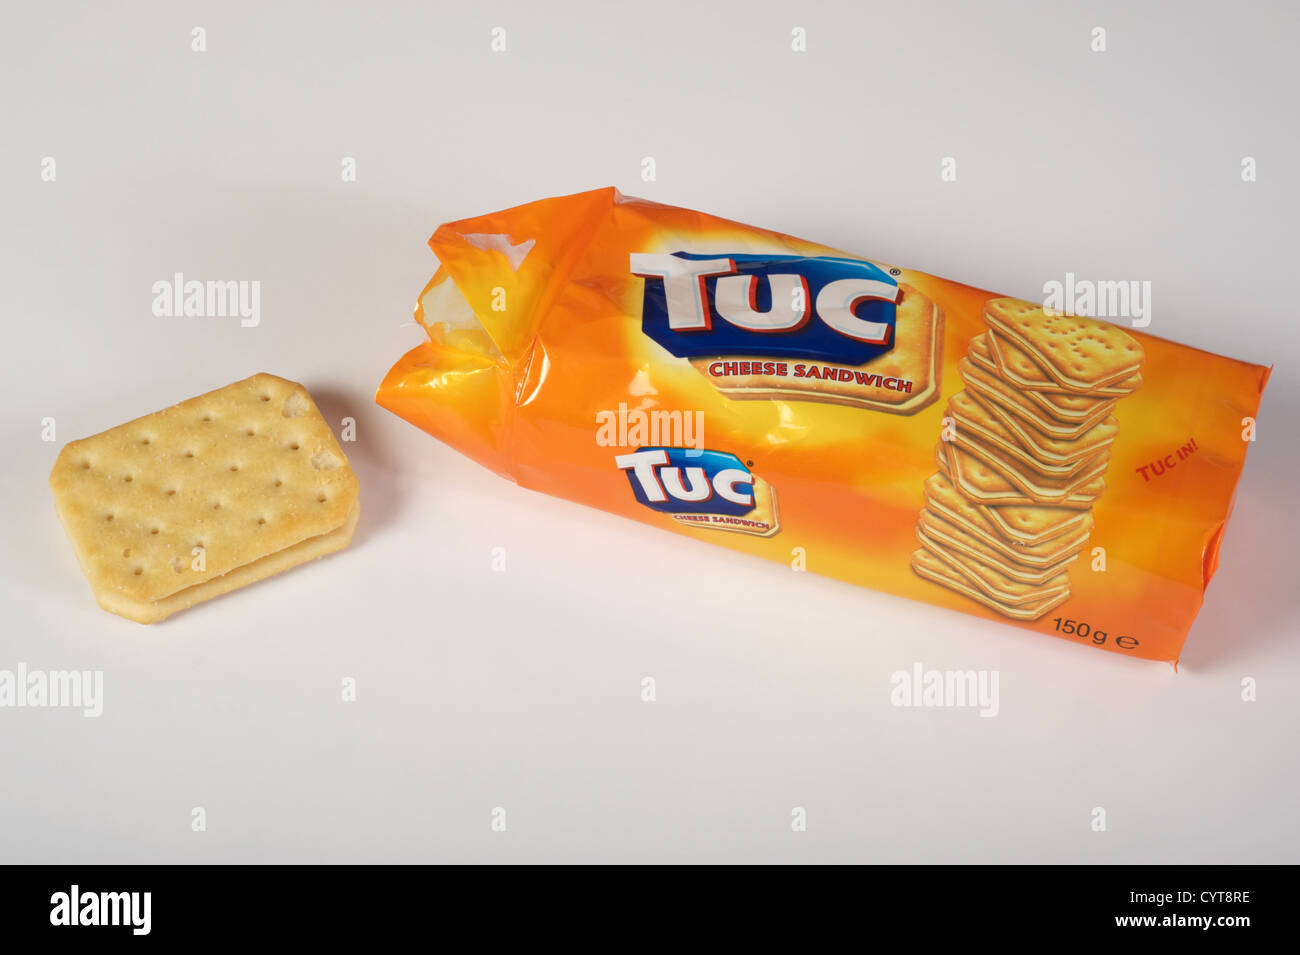 TUC cheese sandwich Stock Photo